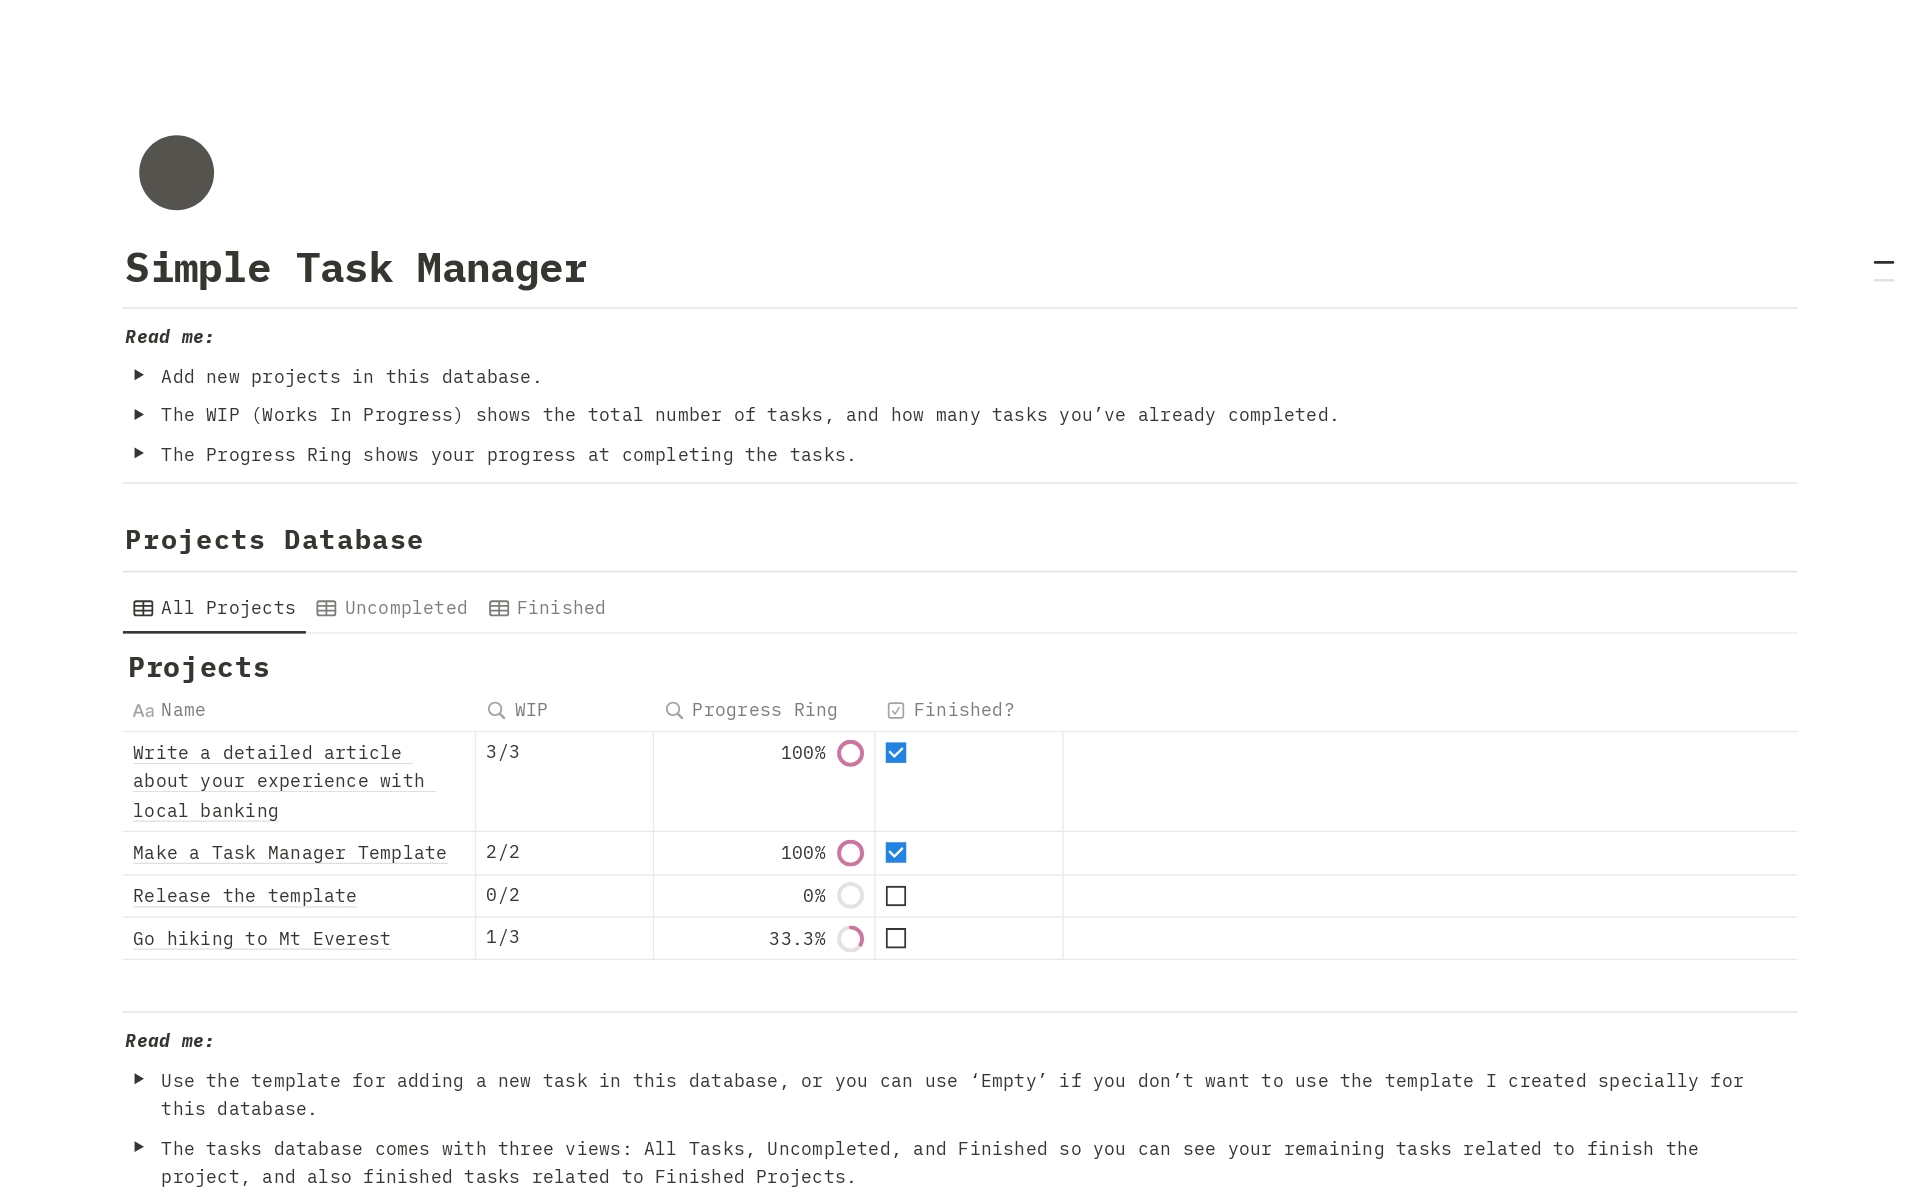 Vista previa de plantilla para Simple Task Manager